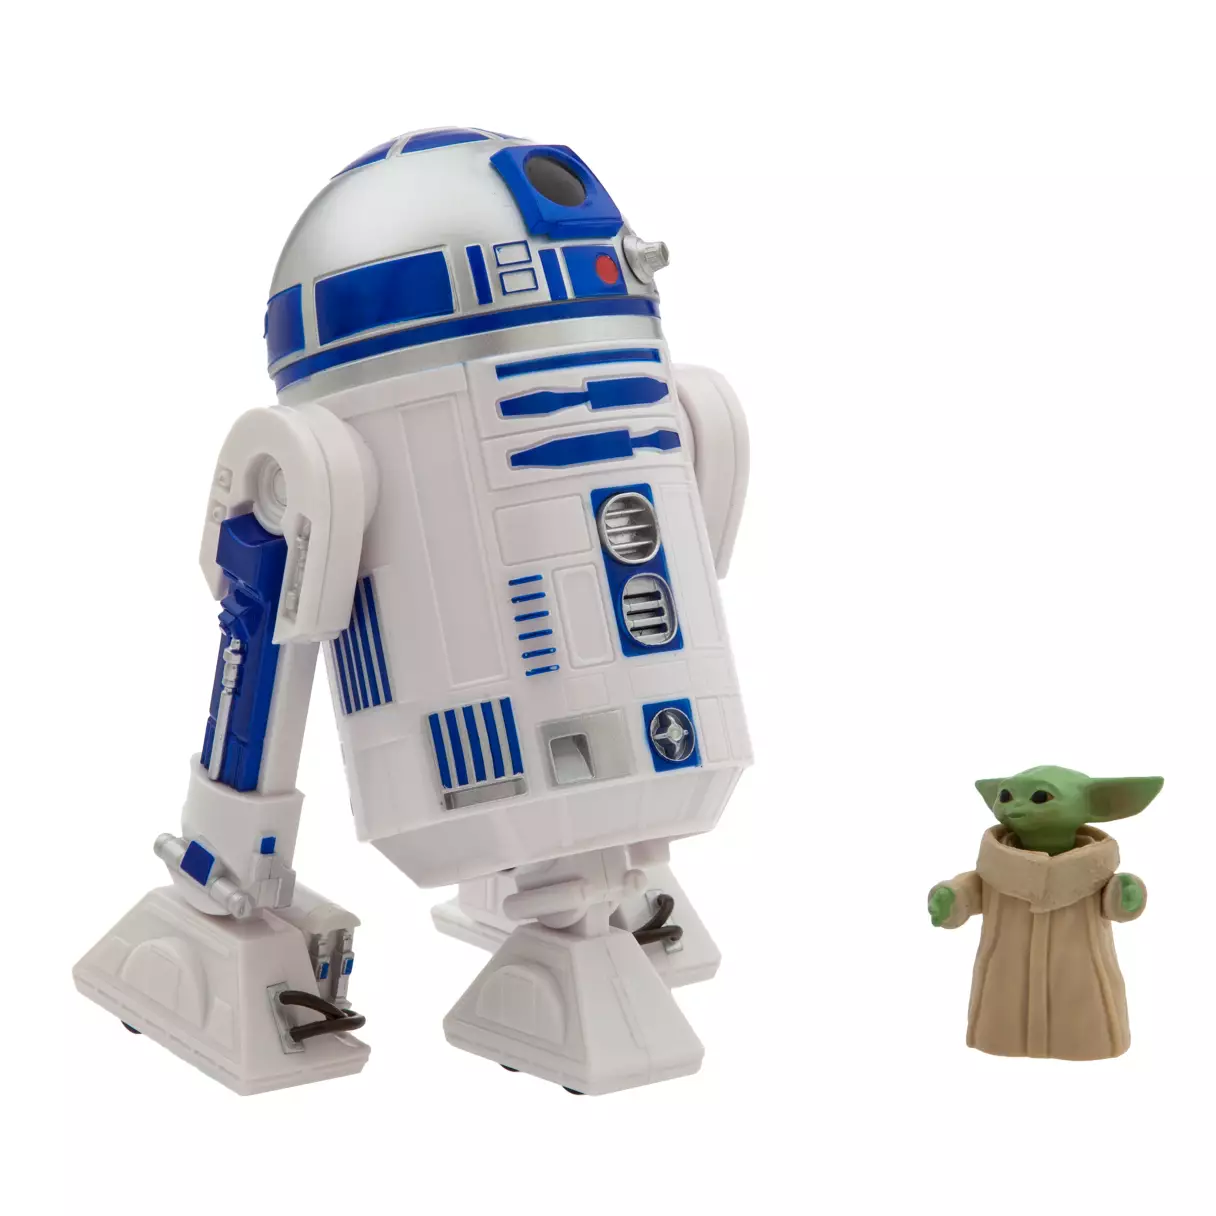 TM Luke Skywalker, R2-D2, and The Child (Grogu) Talking Figure Set 4